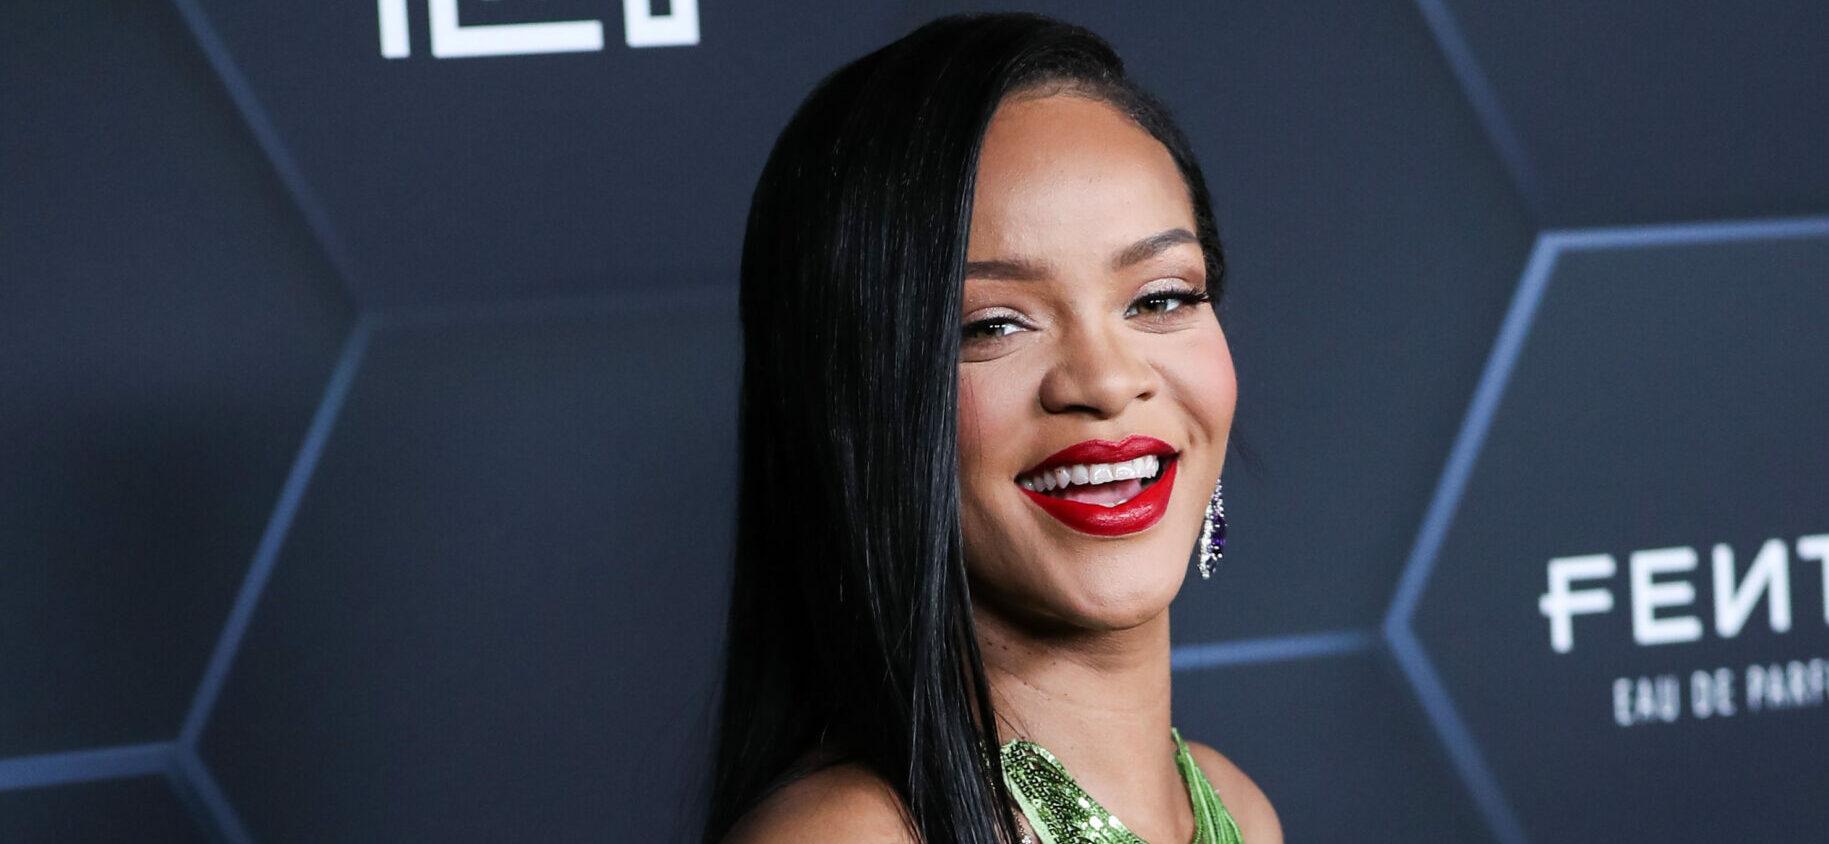 Rihanna Speaks On Motherhood Experience: ‘Wild, Trippy As Hell’